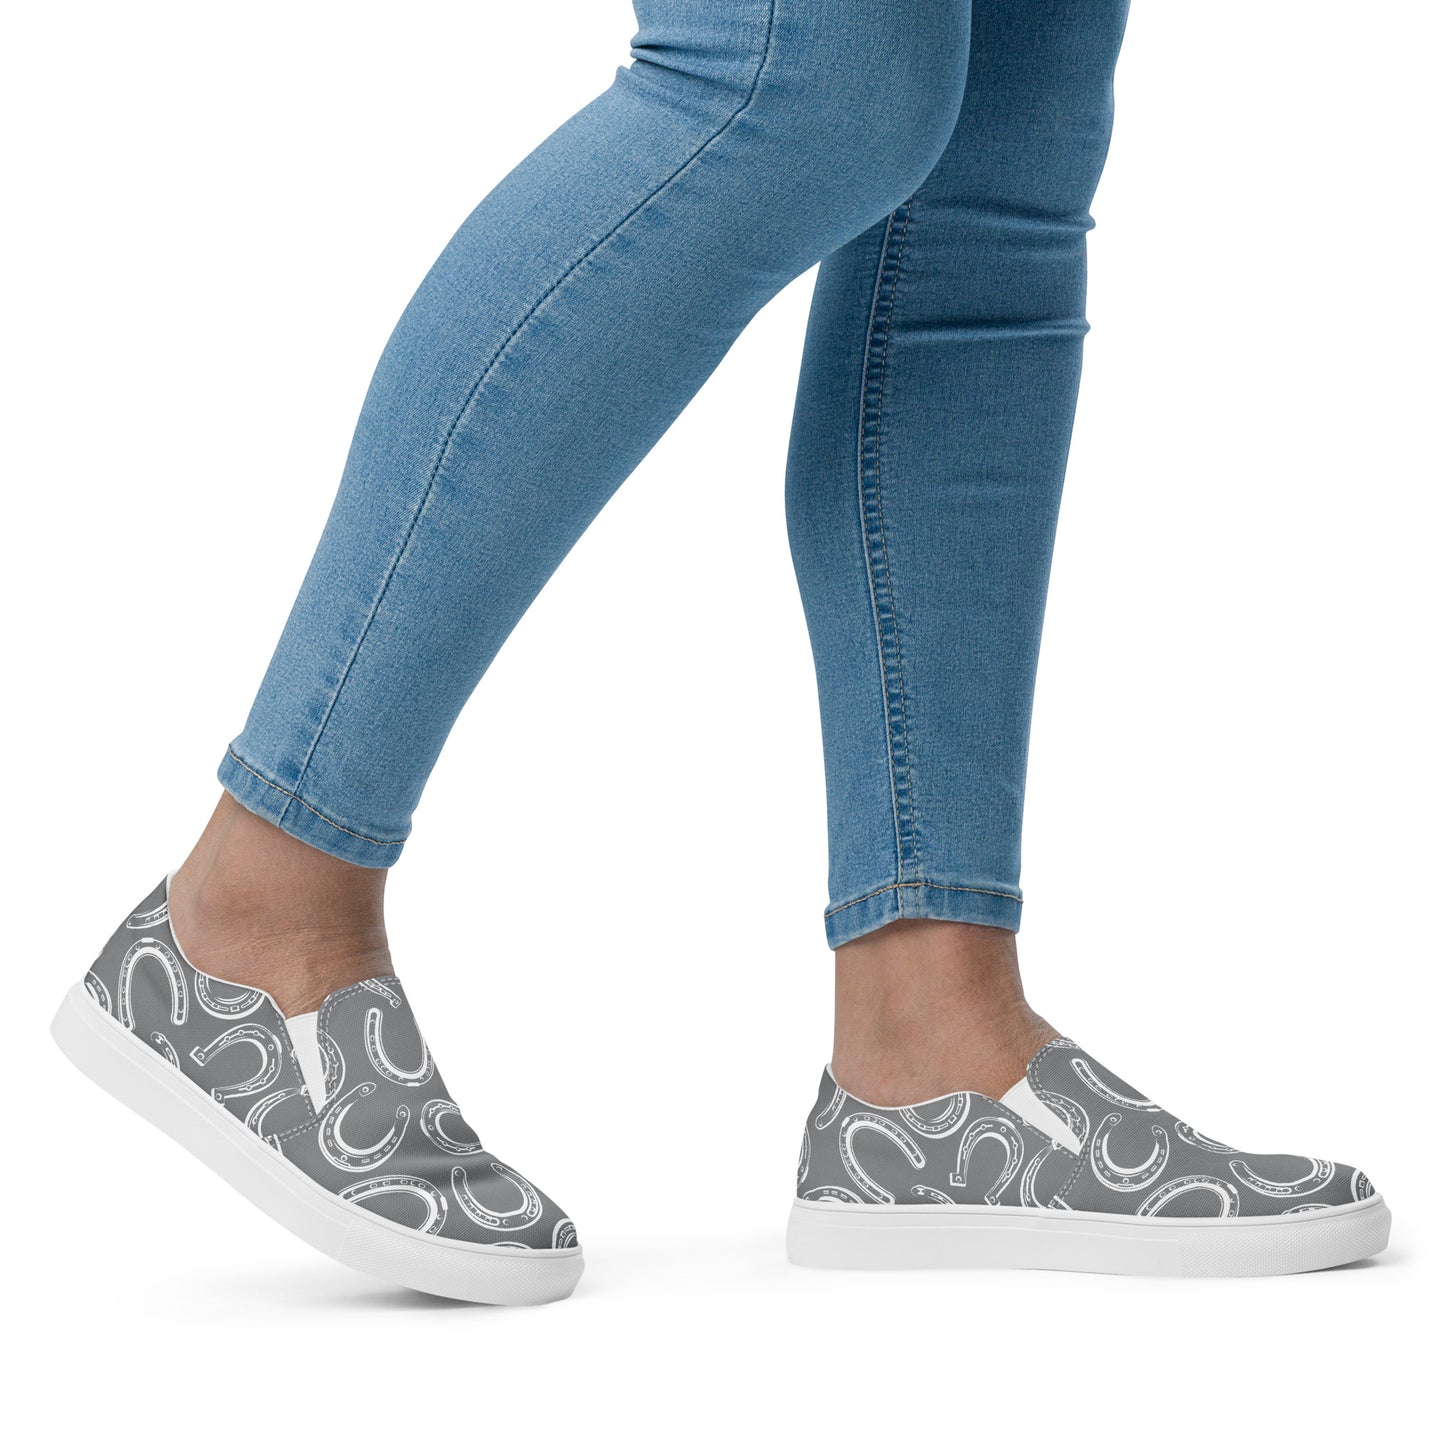 Horseshoe Print Grey - Women’s slip-on canvas shoes